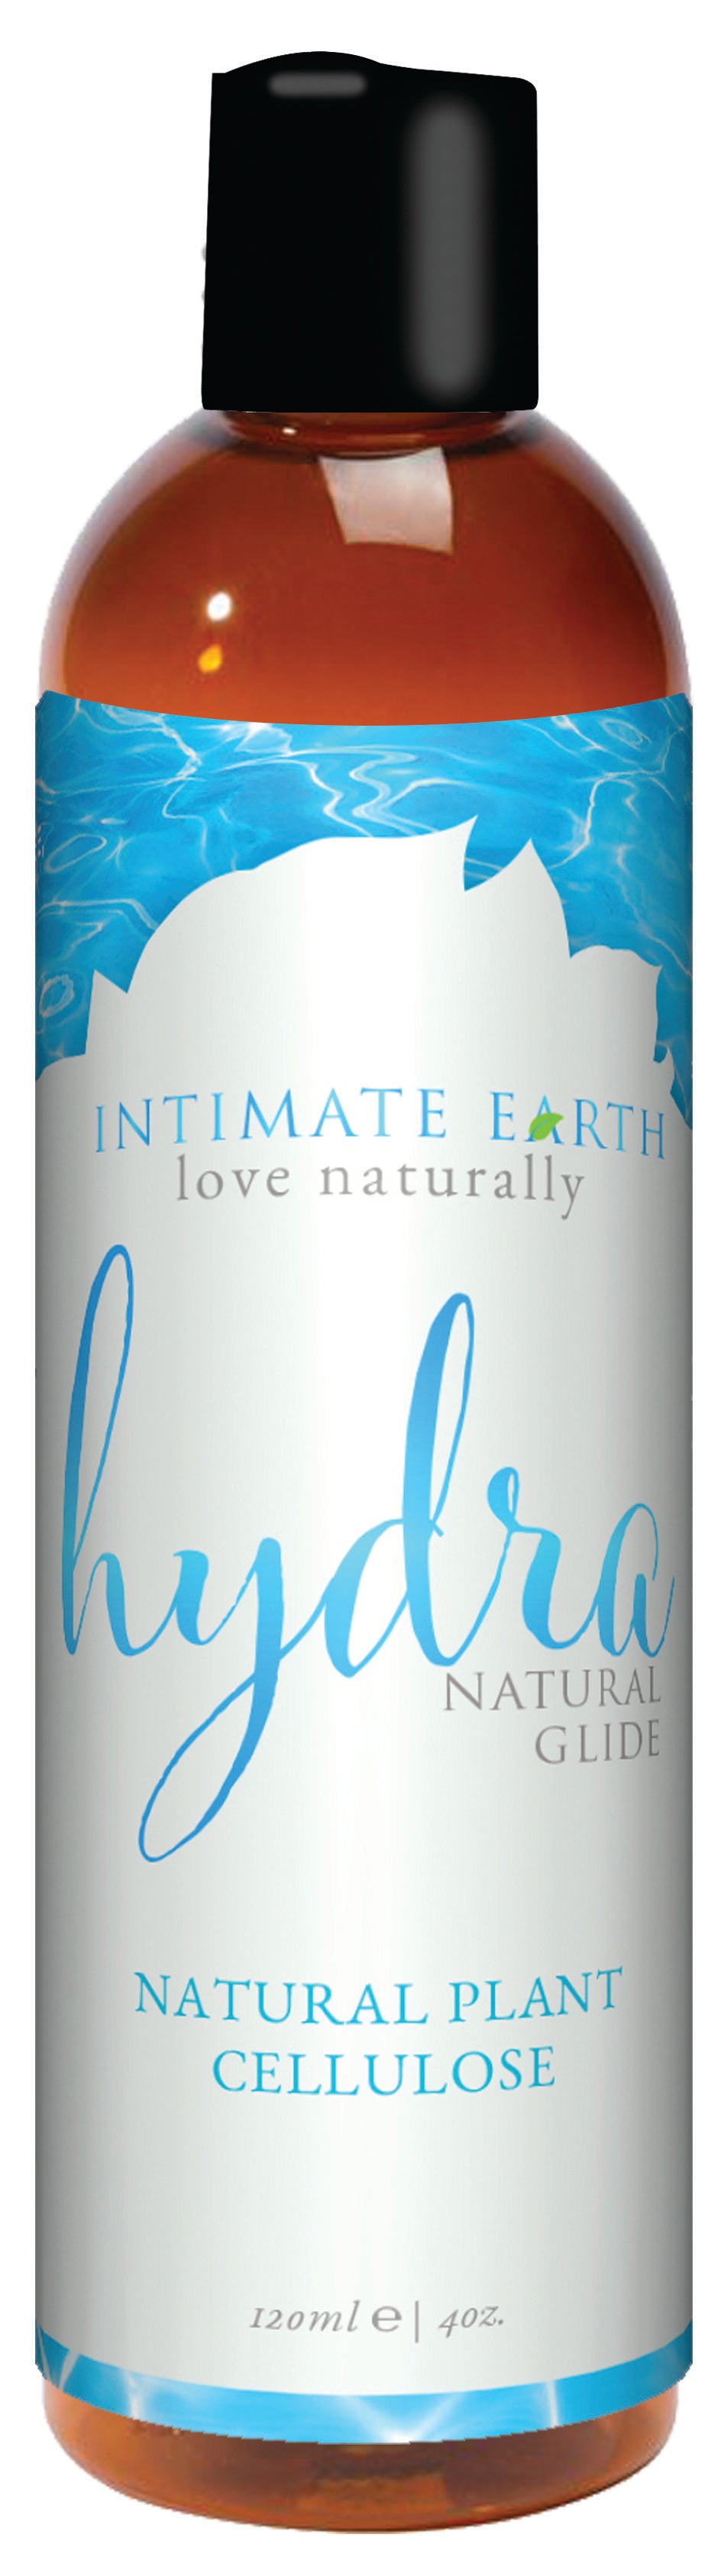 Intime Erde - Hydra Natural Glide 120 ml